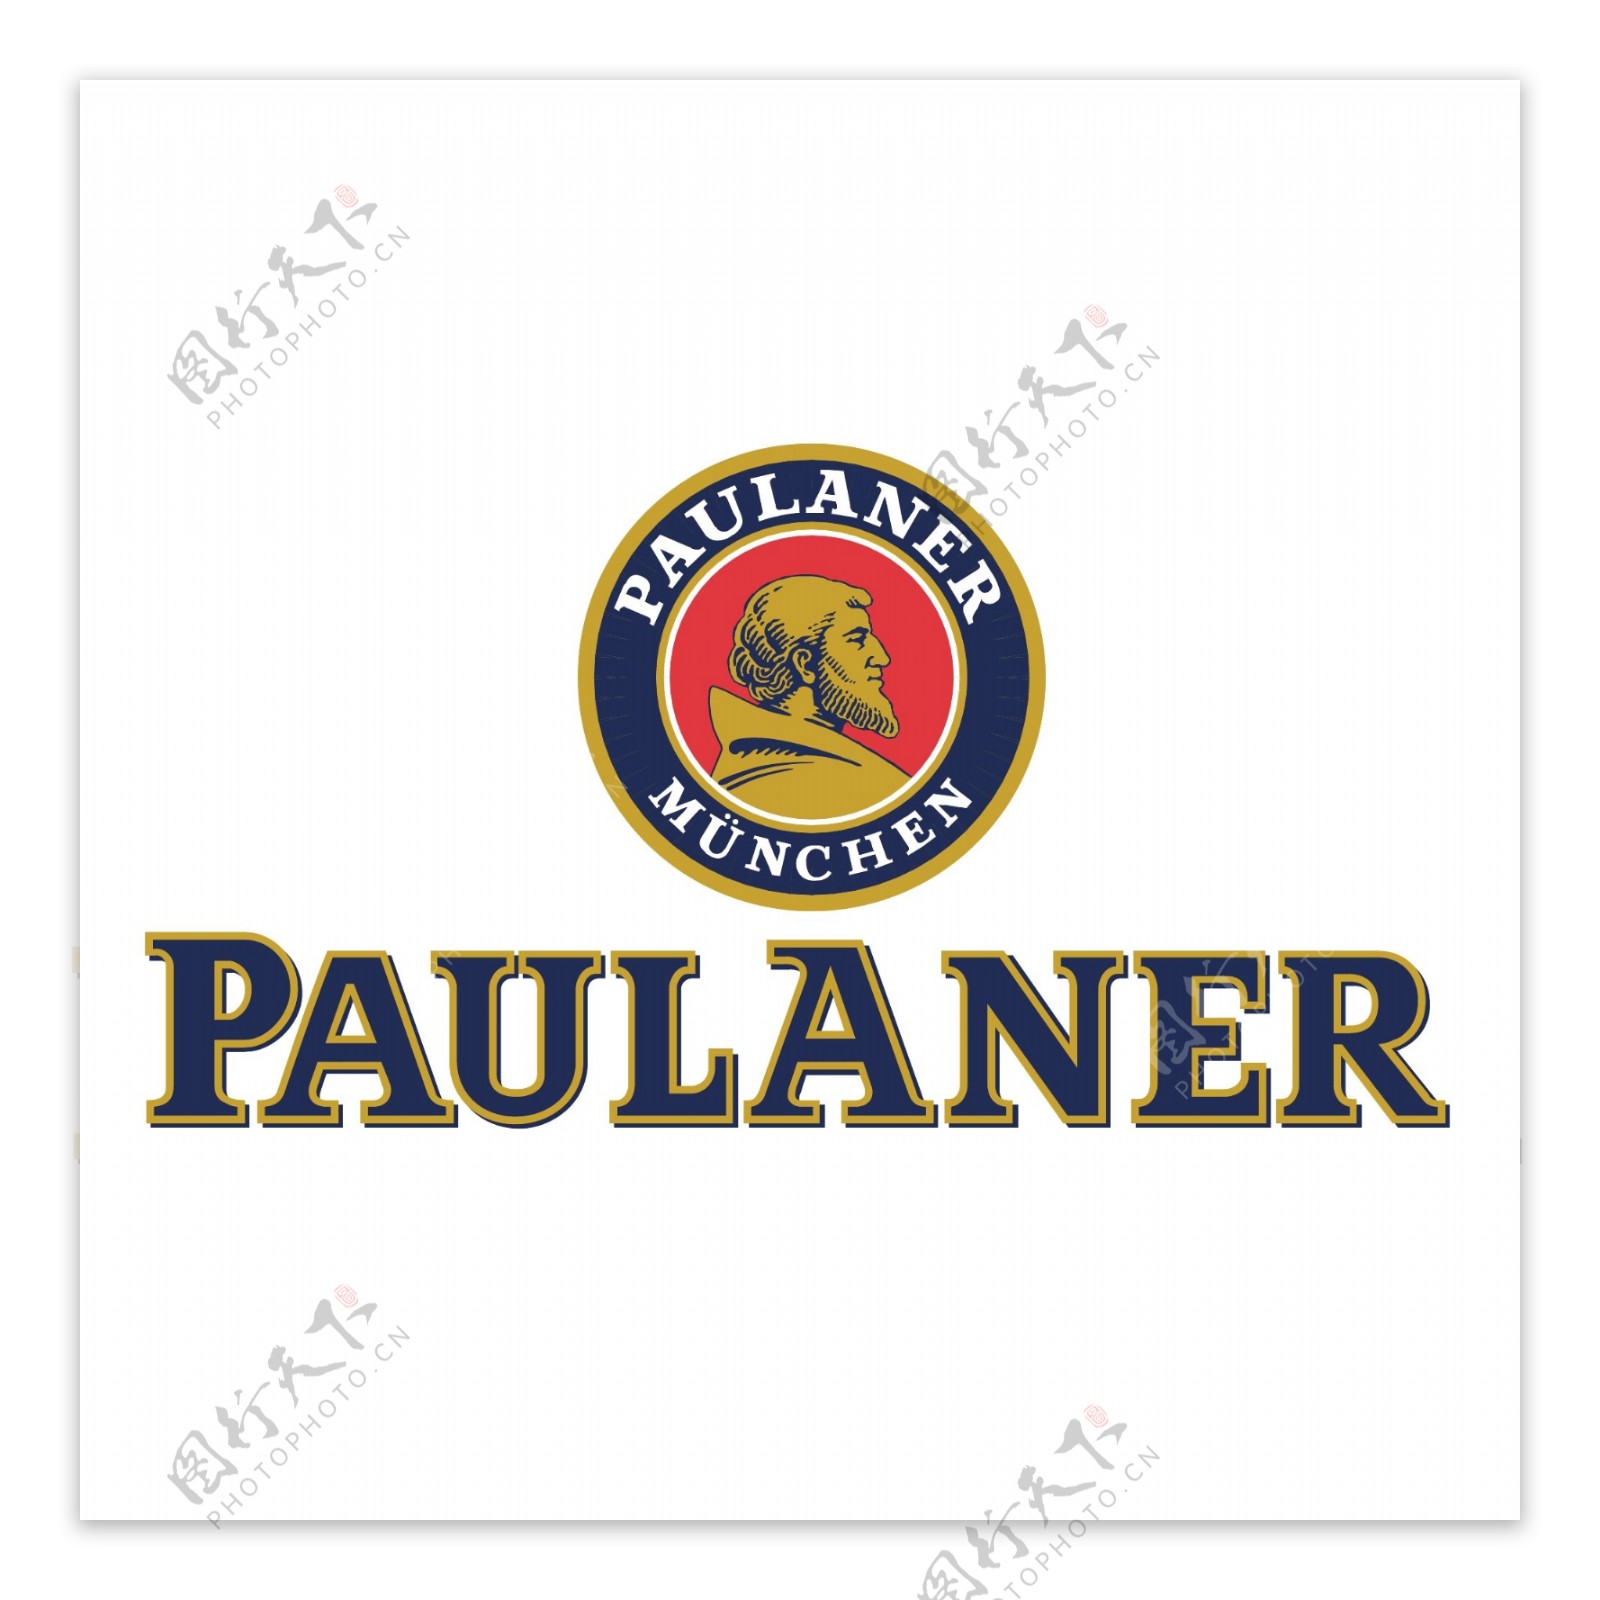 Paulaner德国柏龙宝莱纳logo图片